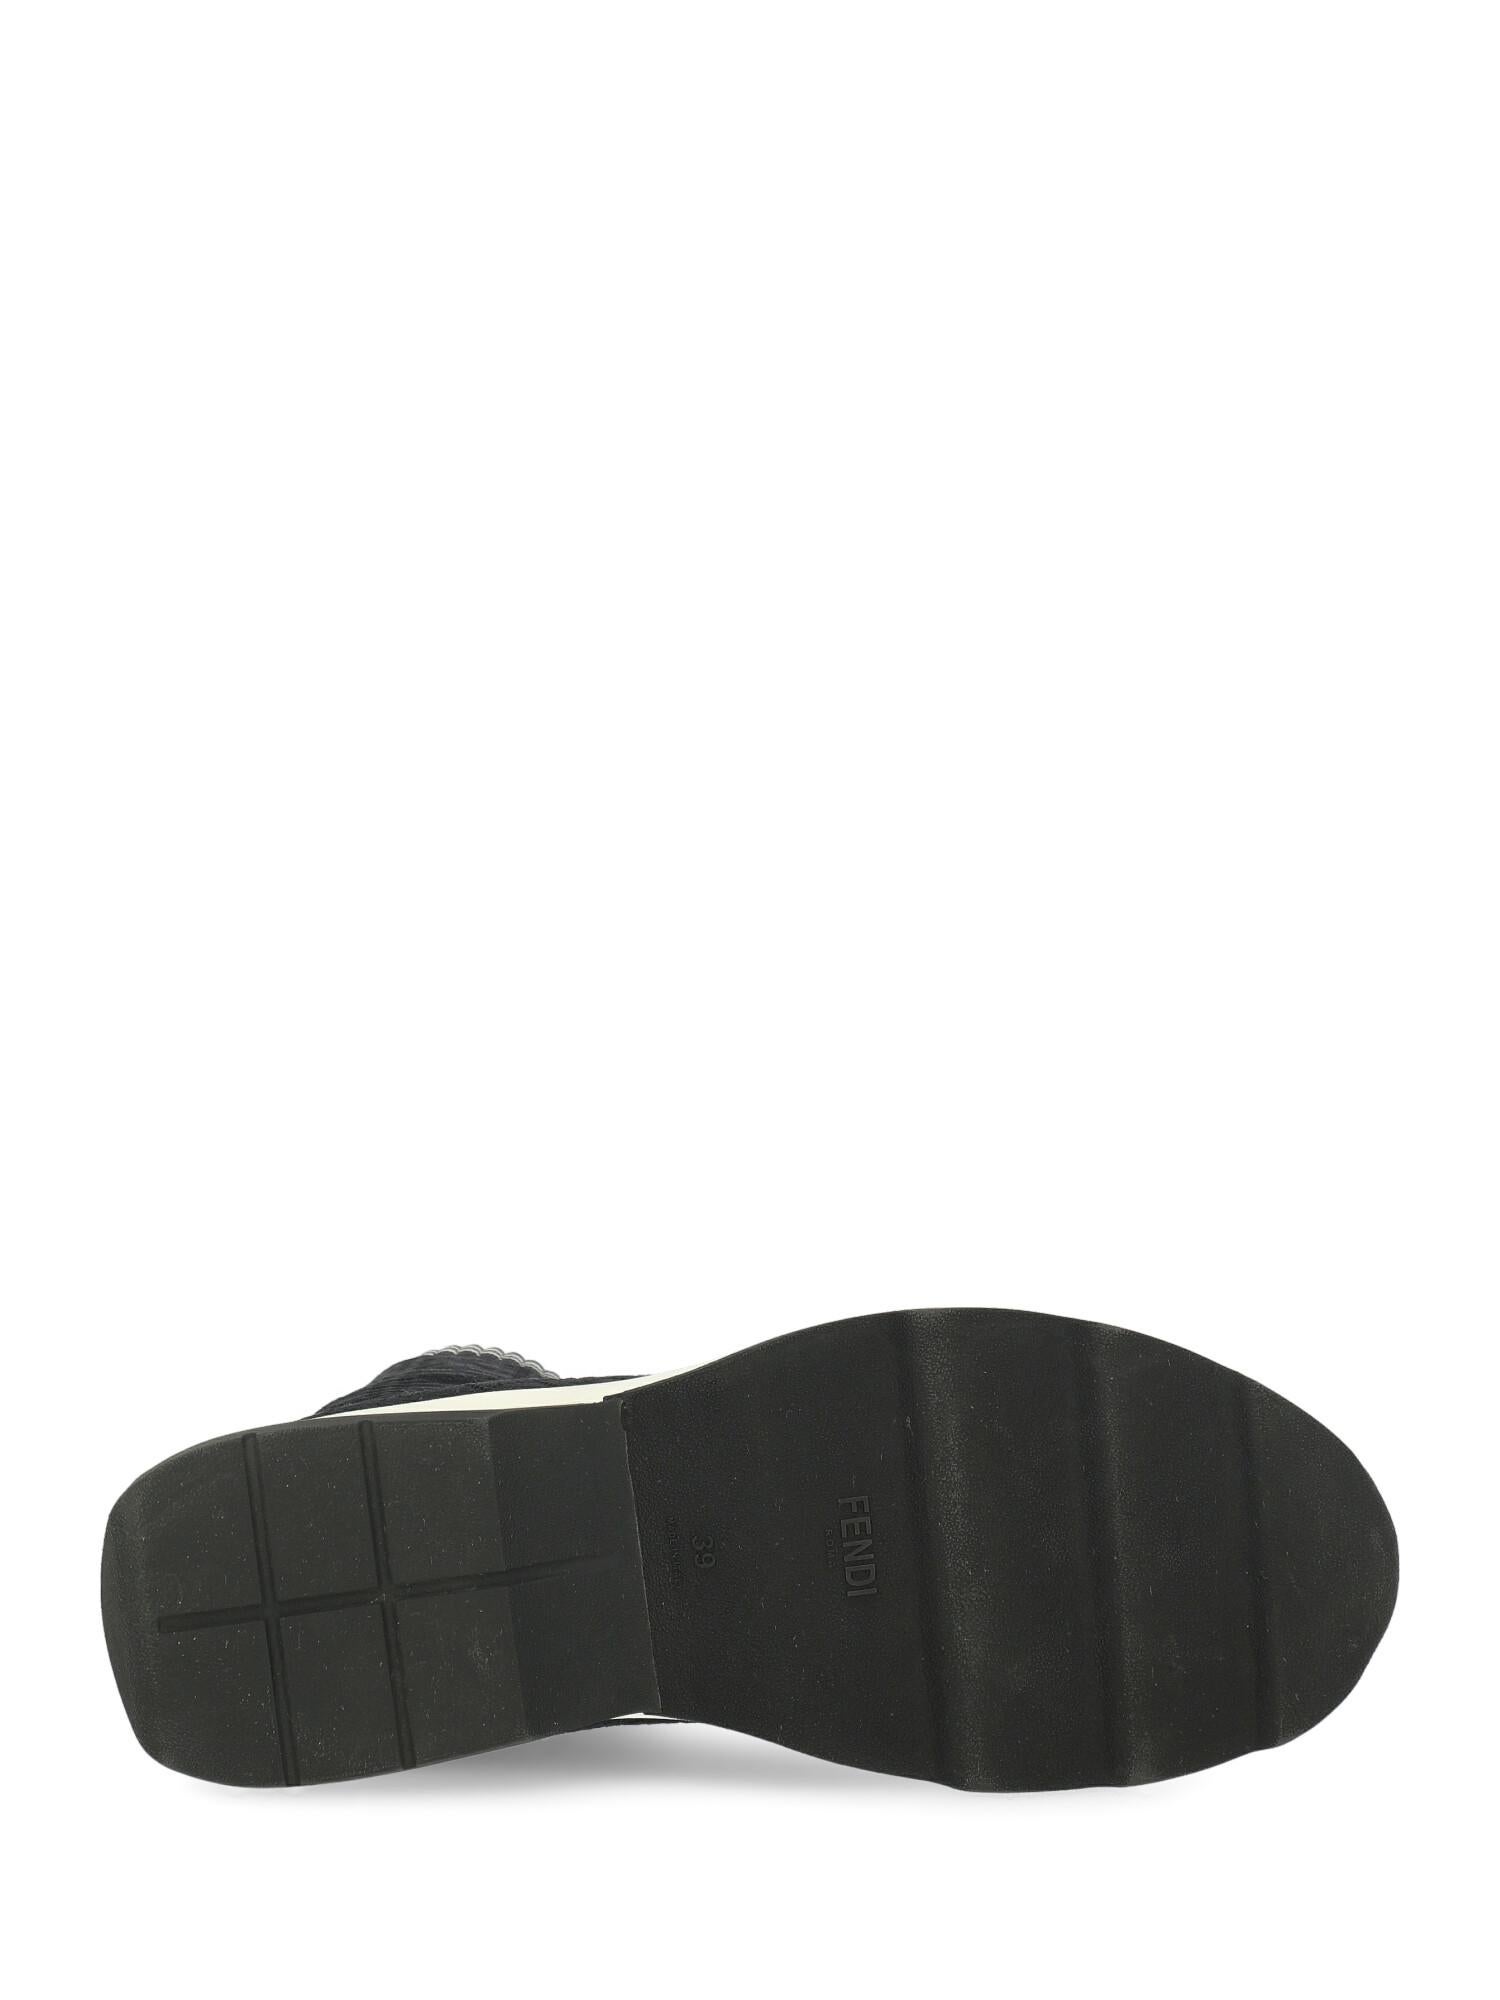 Fendi Woman Sneakers Black Fabric IT 39 For Sale 1